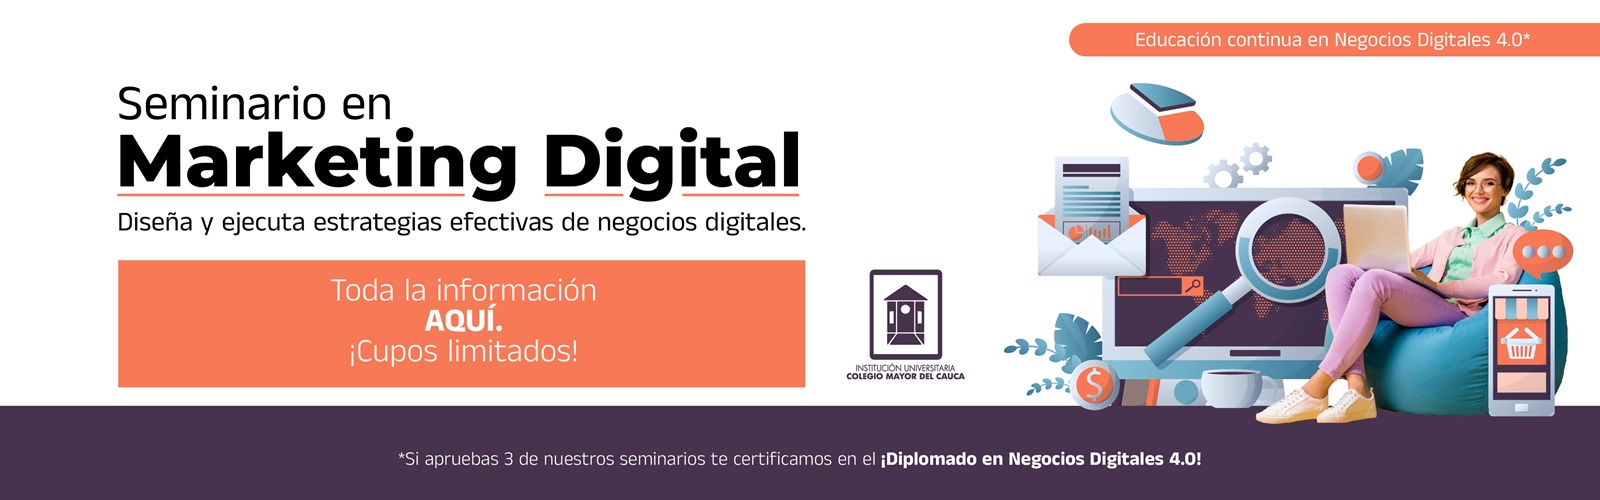 Banner_Seminario_Marketing_Digital